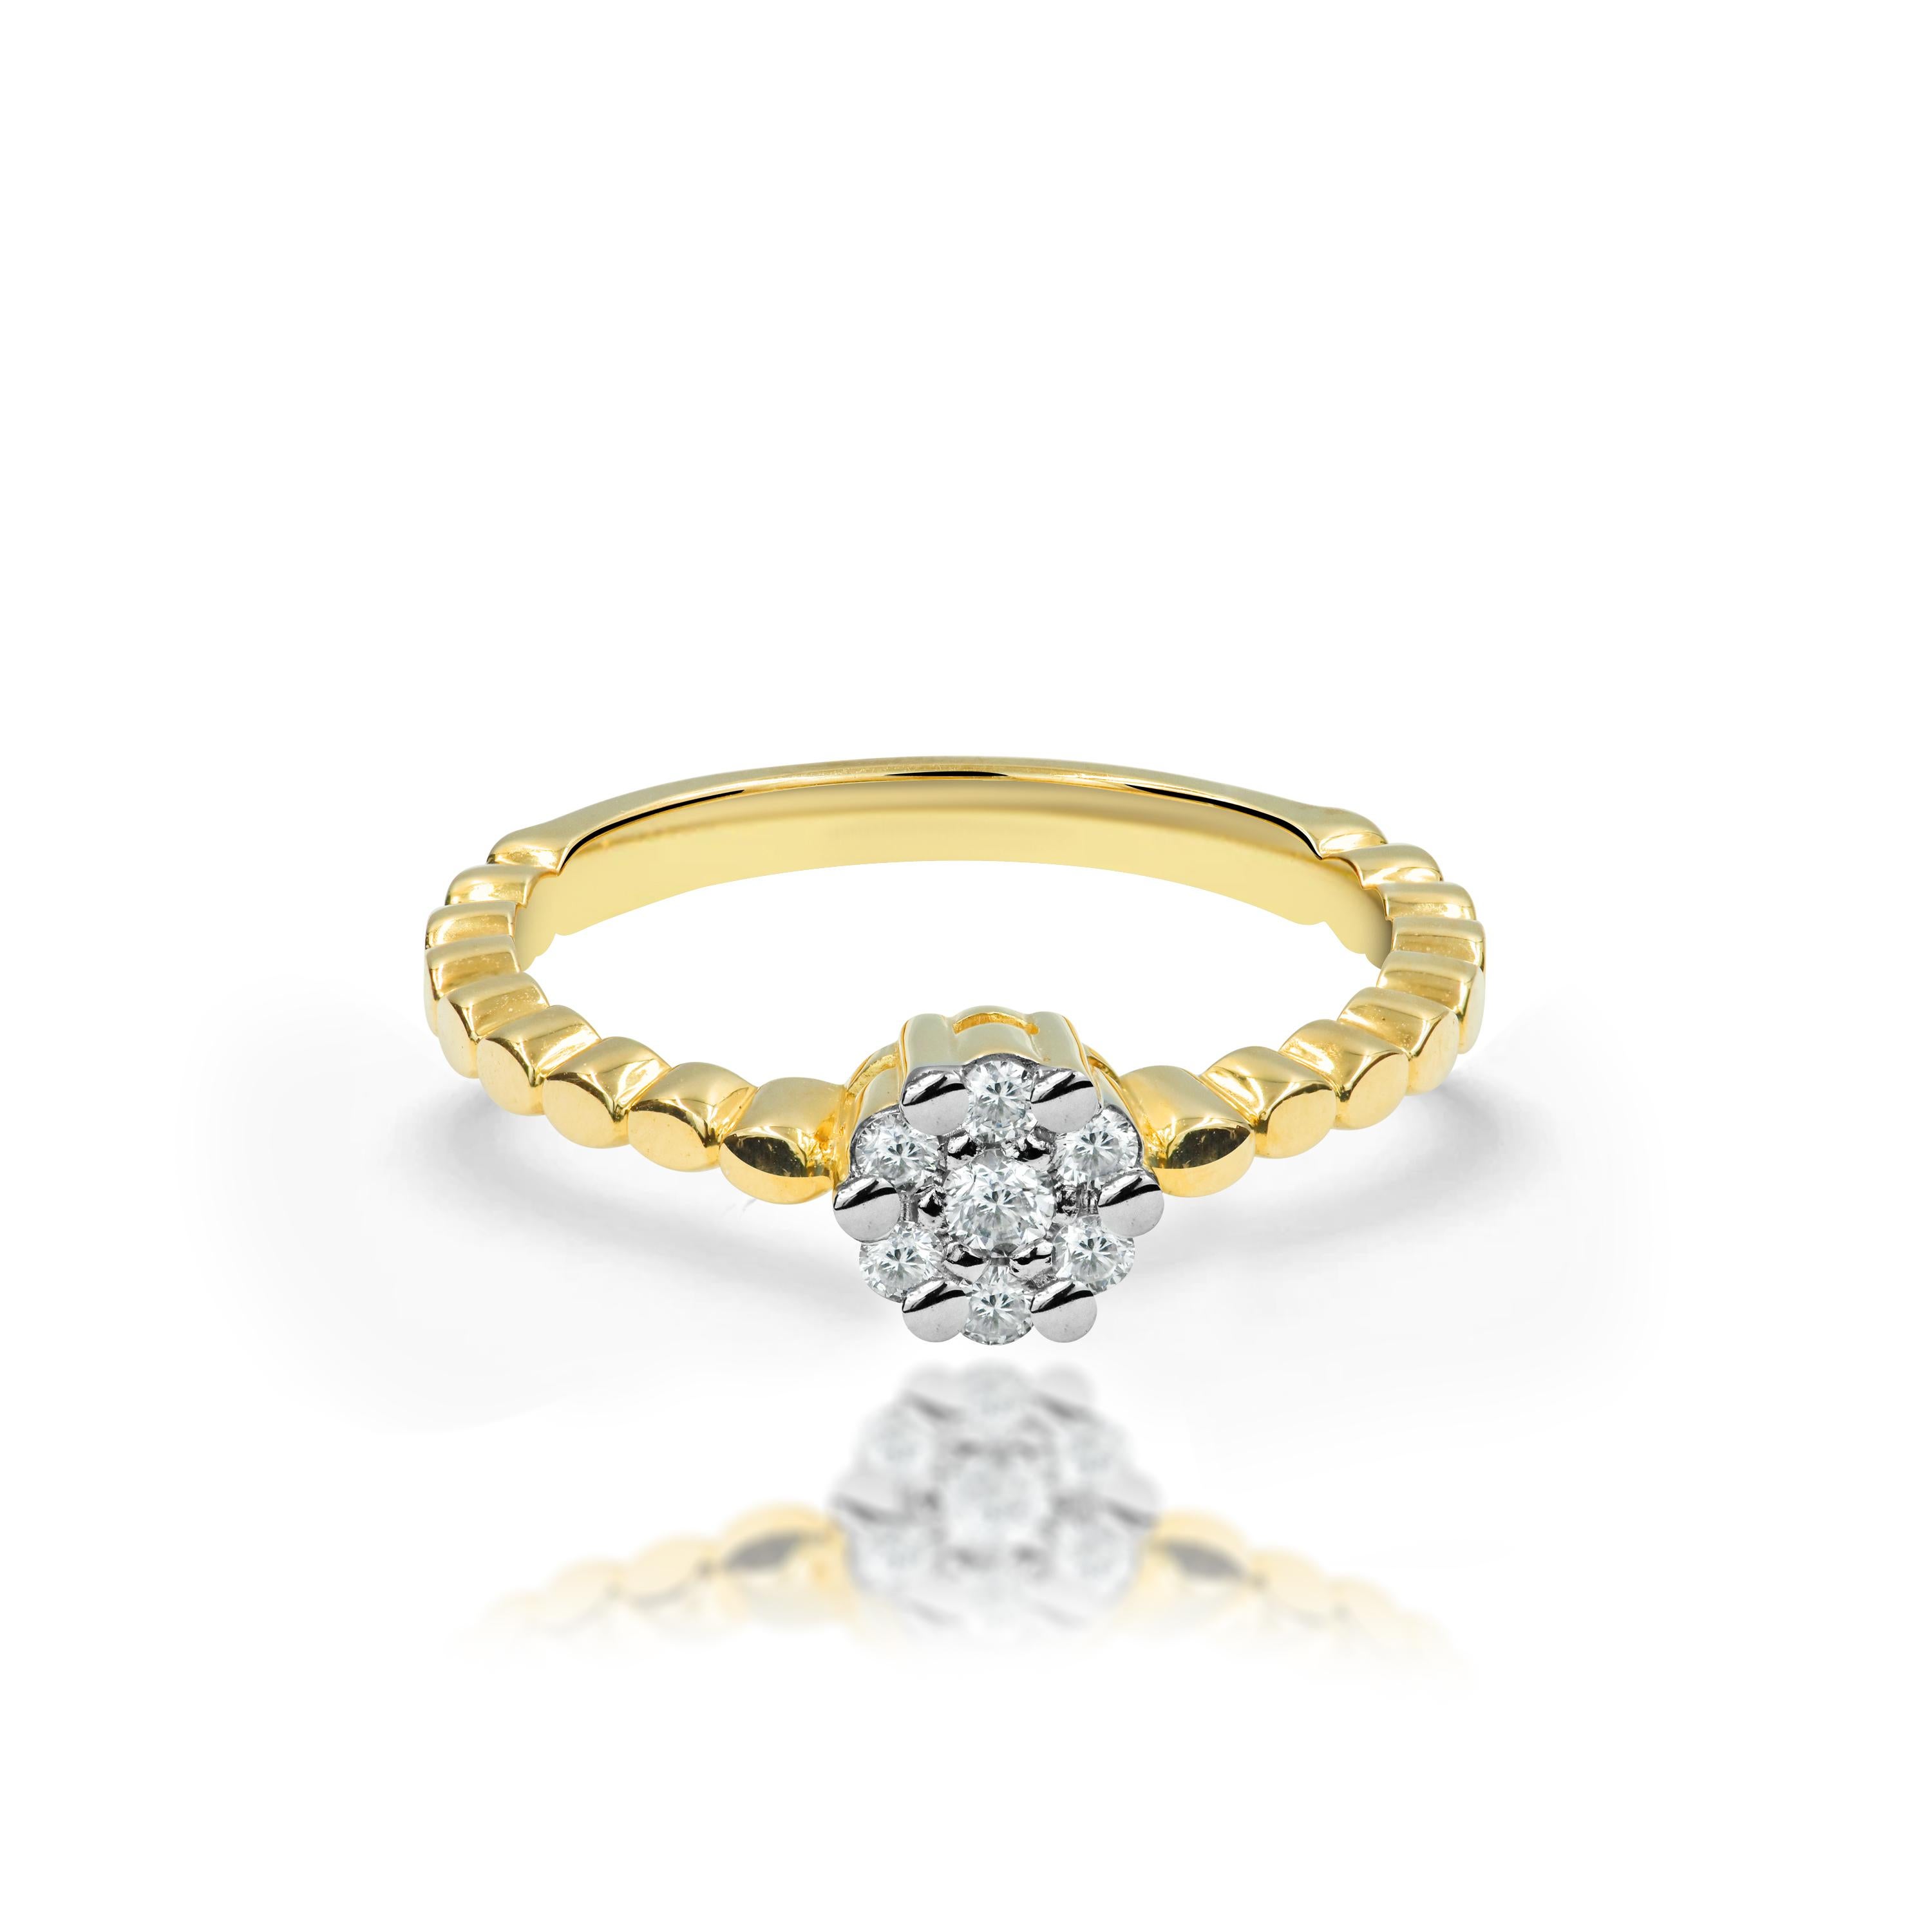 For Sale:  18k Gold Diamond Ring Delicate Engagement Ring Diamond Wedding Ring 2